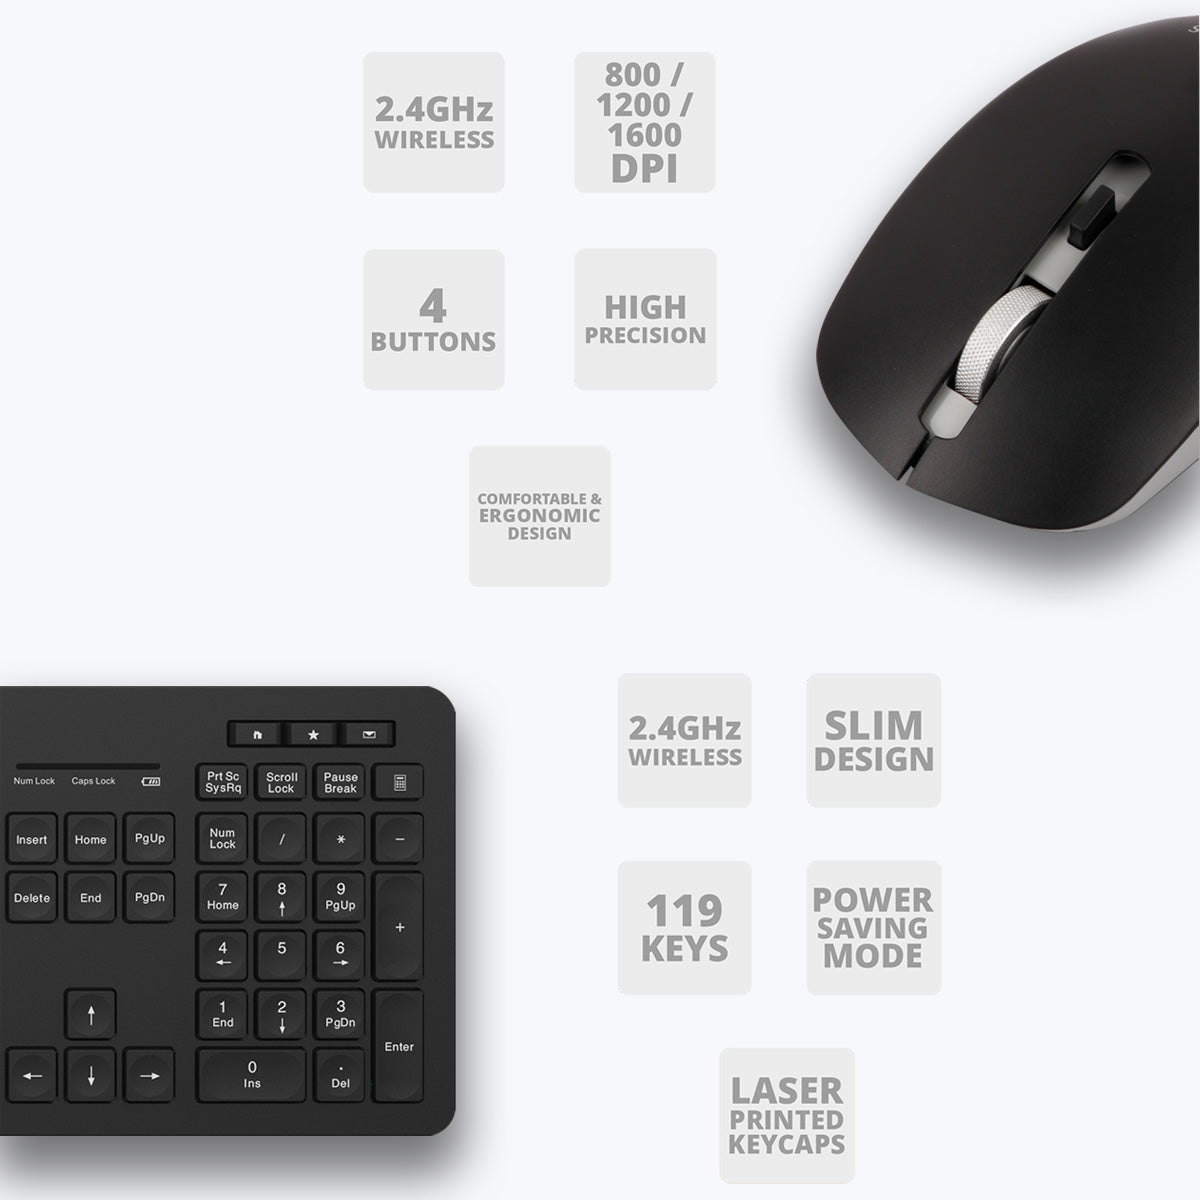 Zeb-Companion 500 - Keyboard and Mouse Combo - Zebronics